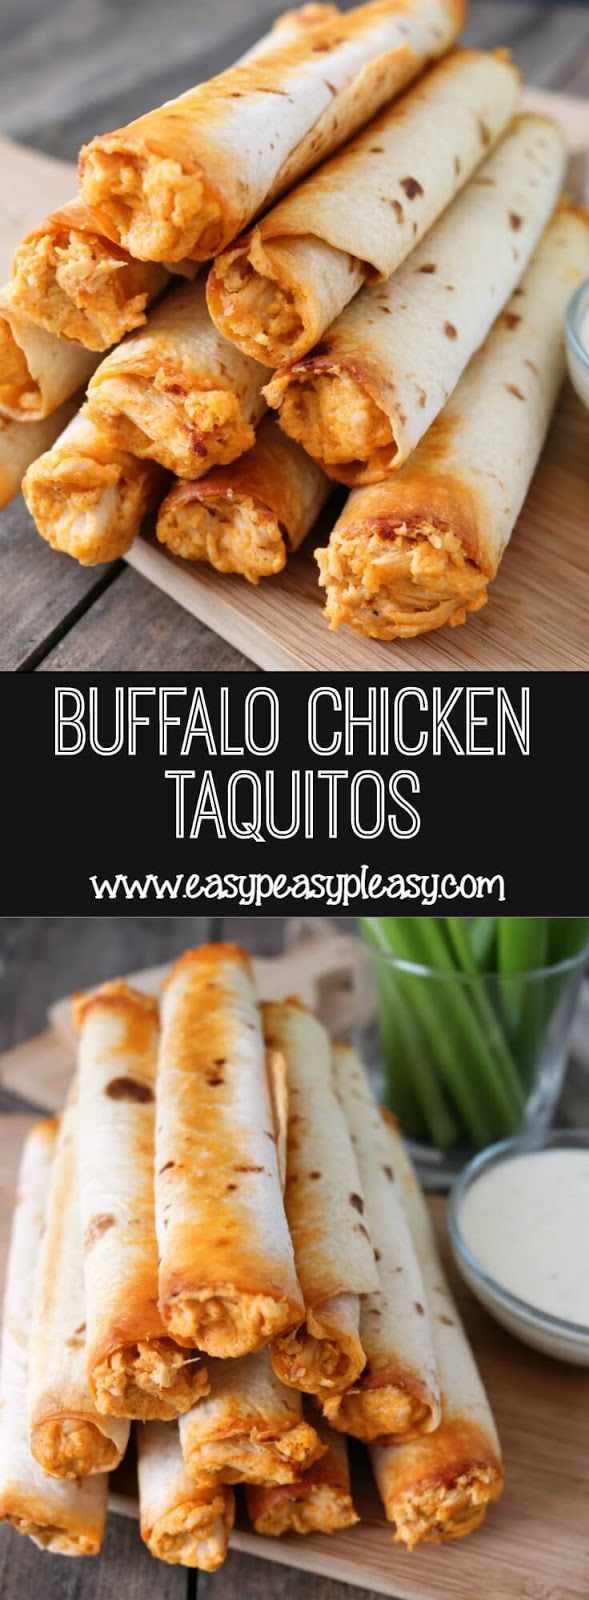 Read More Recipes: Extra Cheesy Buffalo Chicken Quesadillas